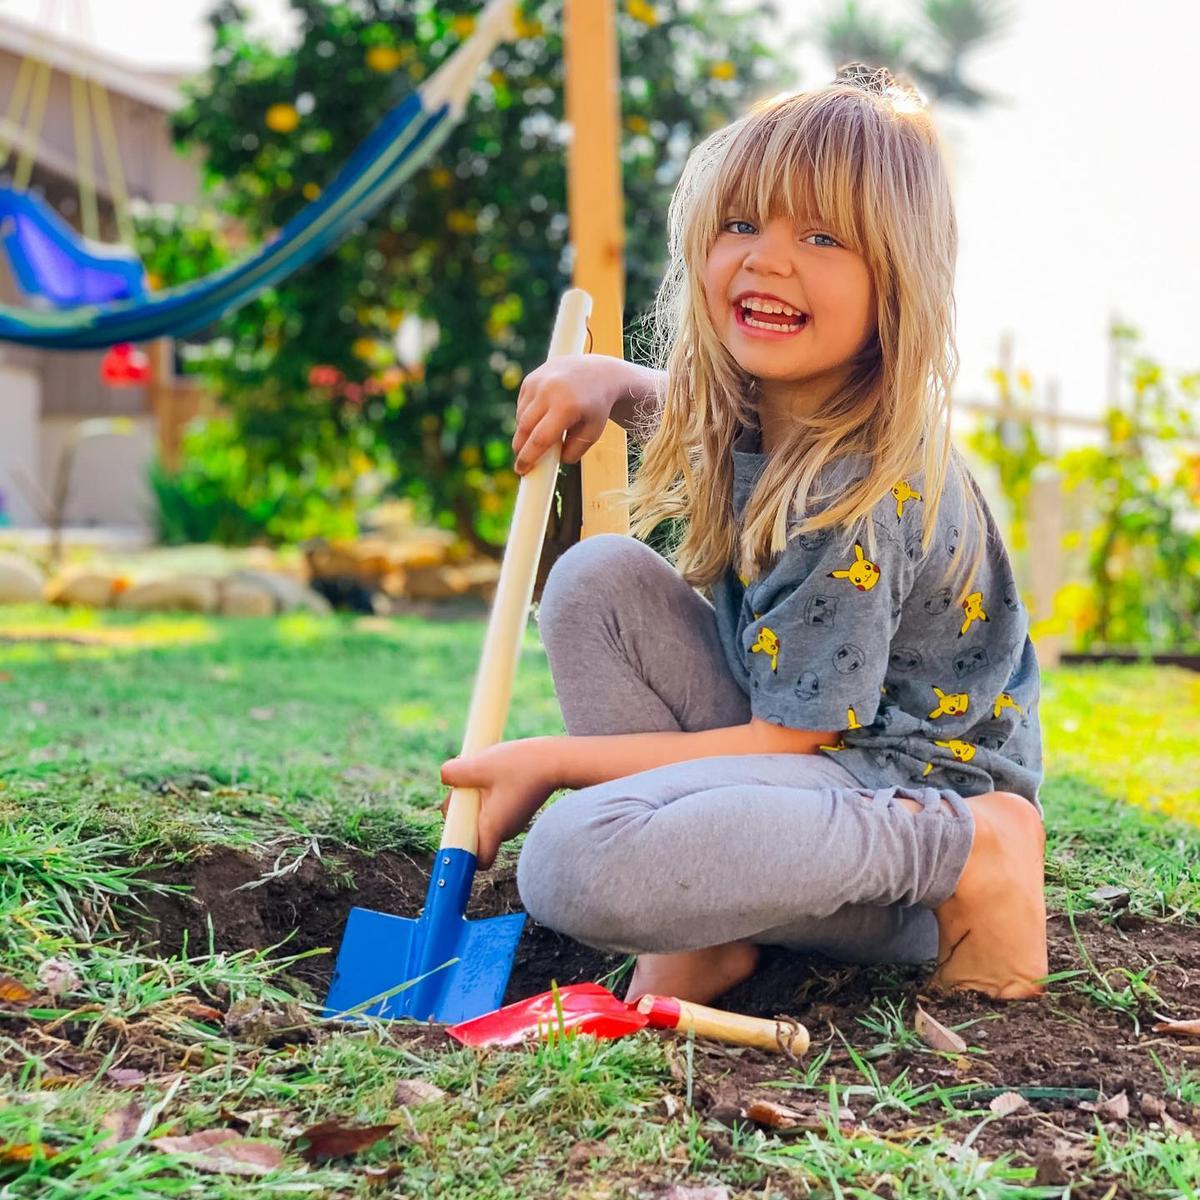 Evelyn helping in the garden. (Courtesy of <a href="https://www.instagram.com/mykidsaredirtyagain/">Taylor Raine</a>)